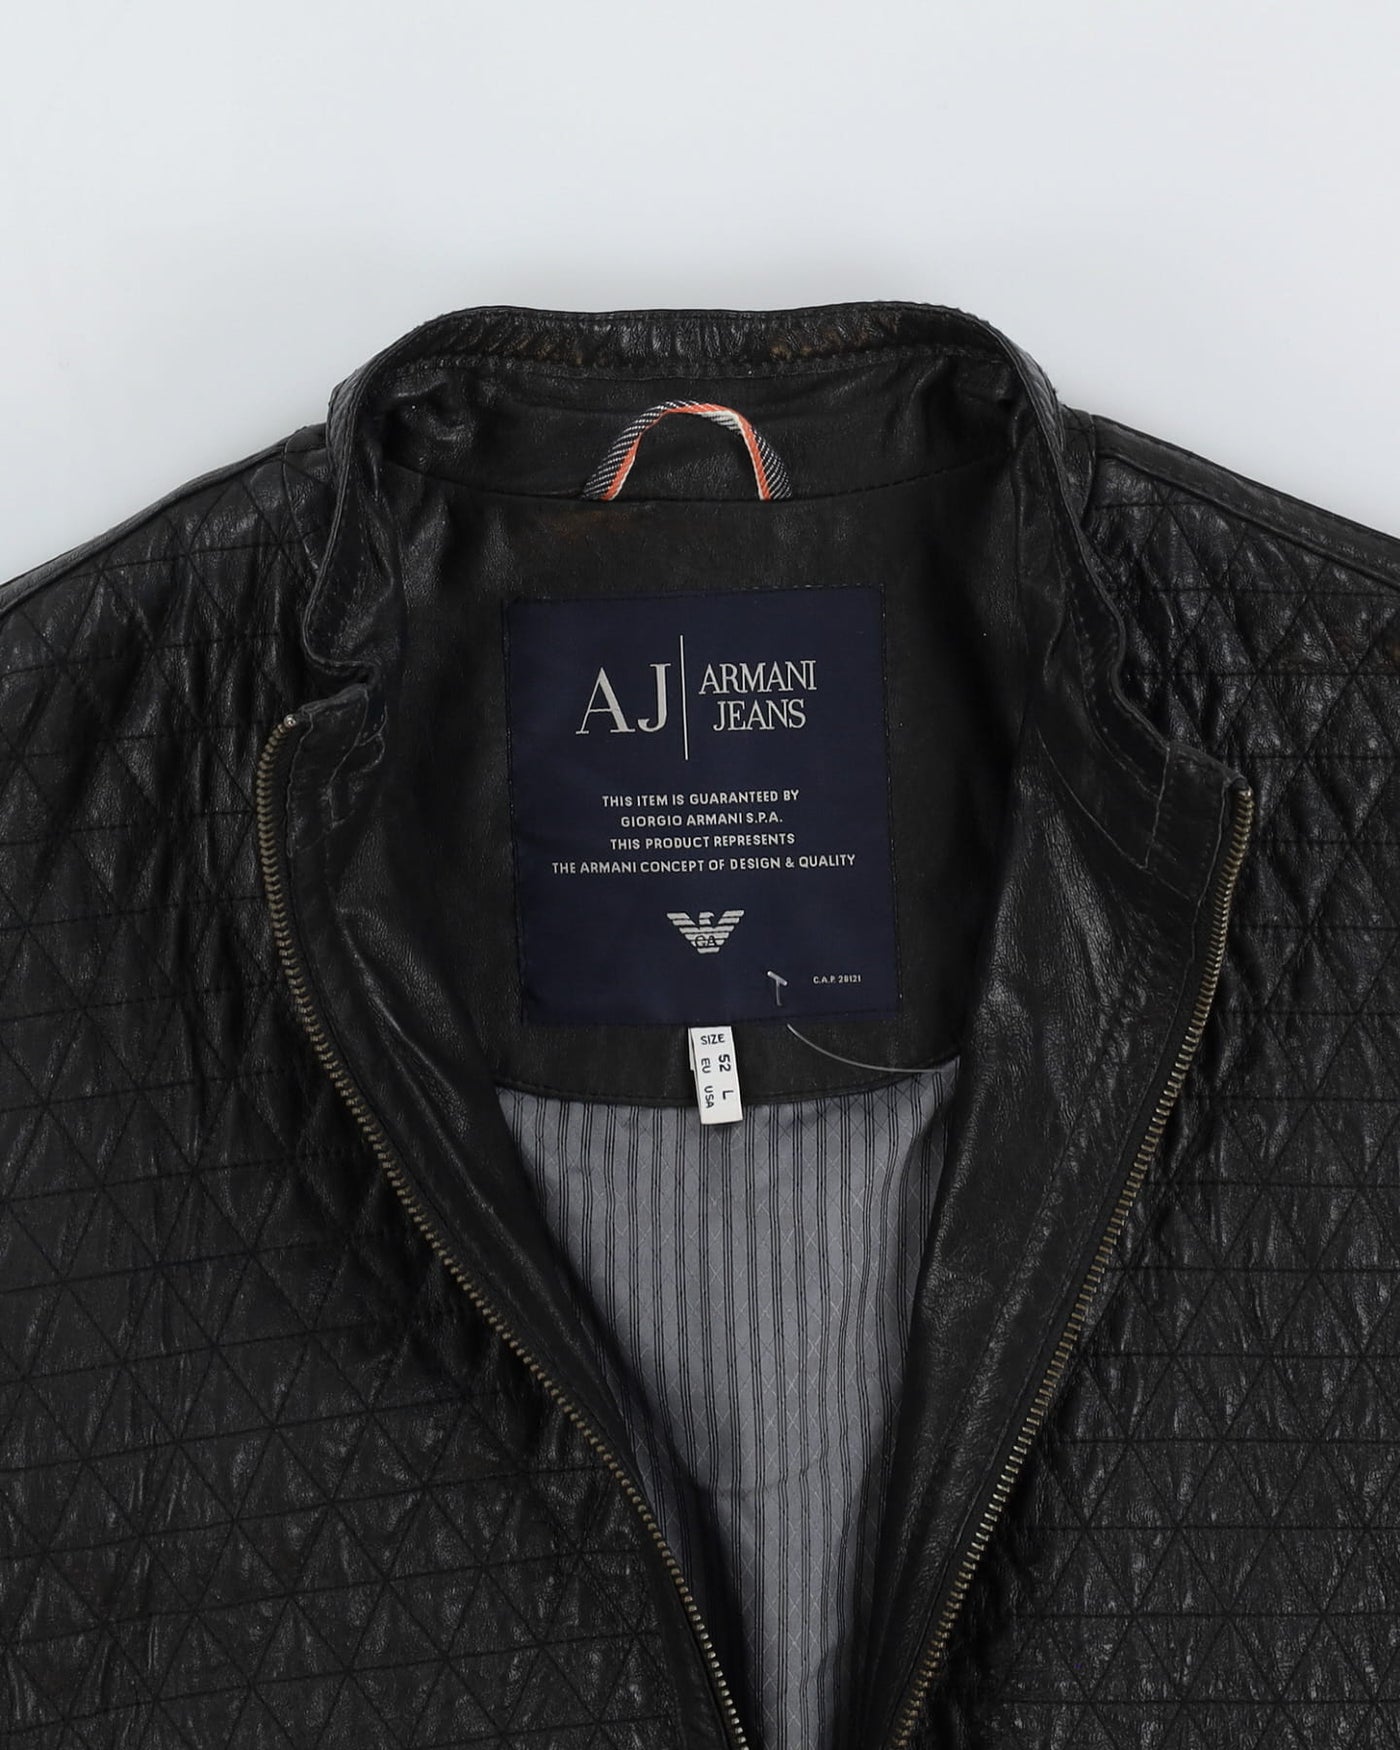 Armani Jeans Black Full-Zip Leather Jacket - M